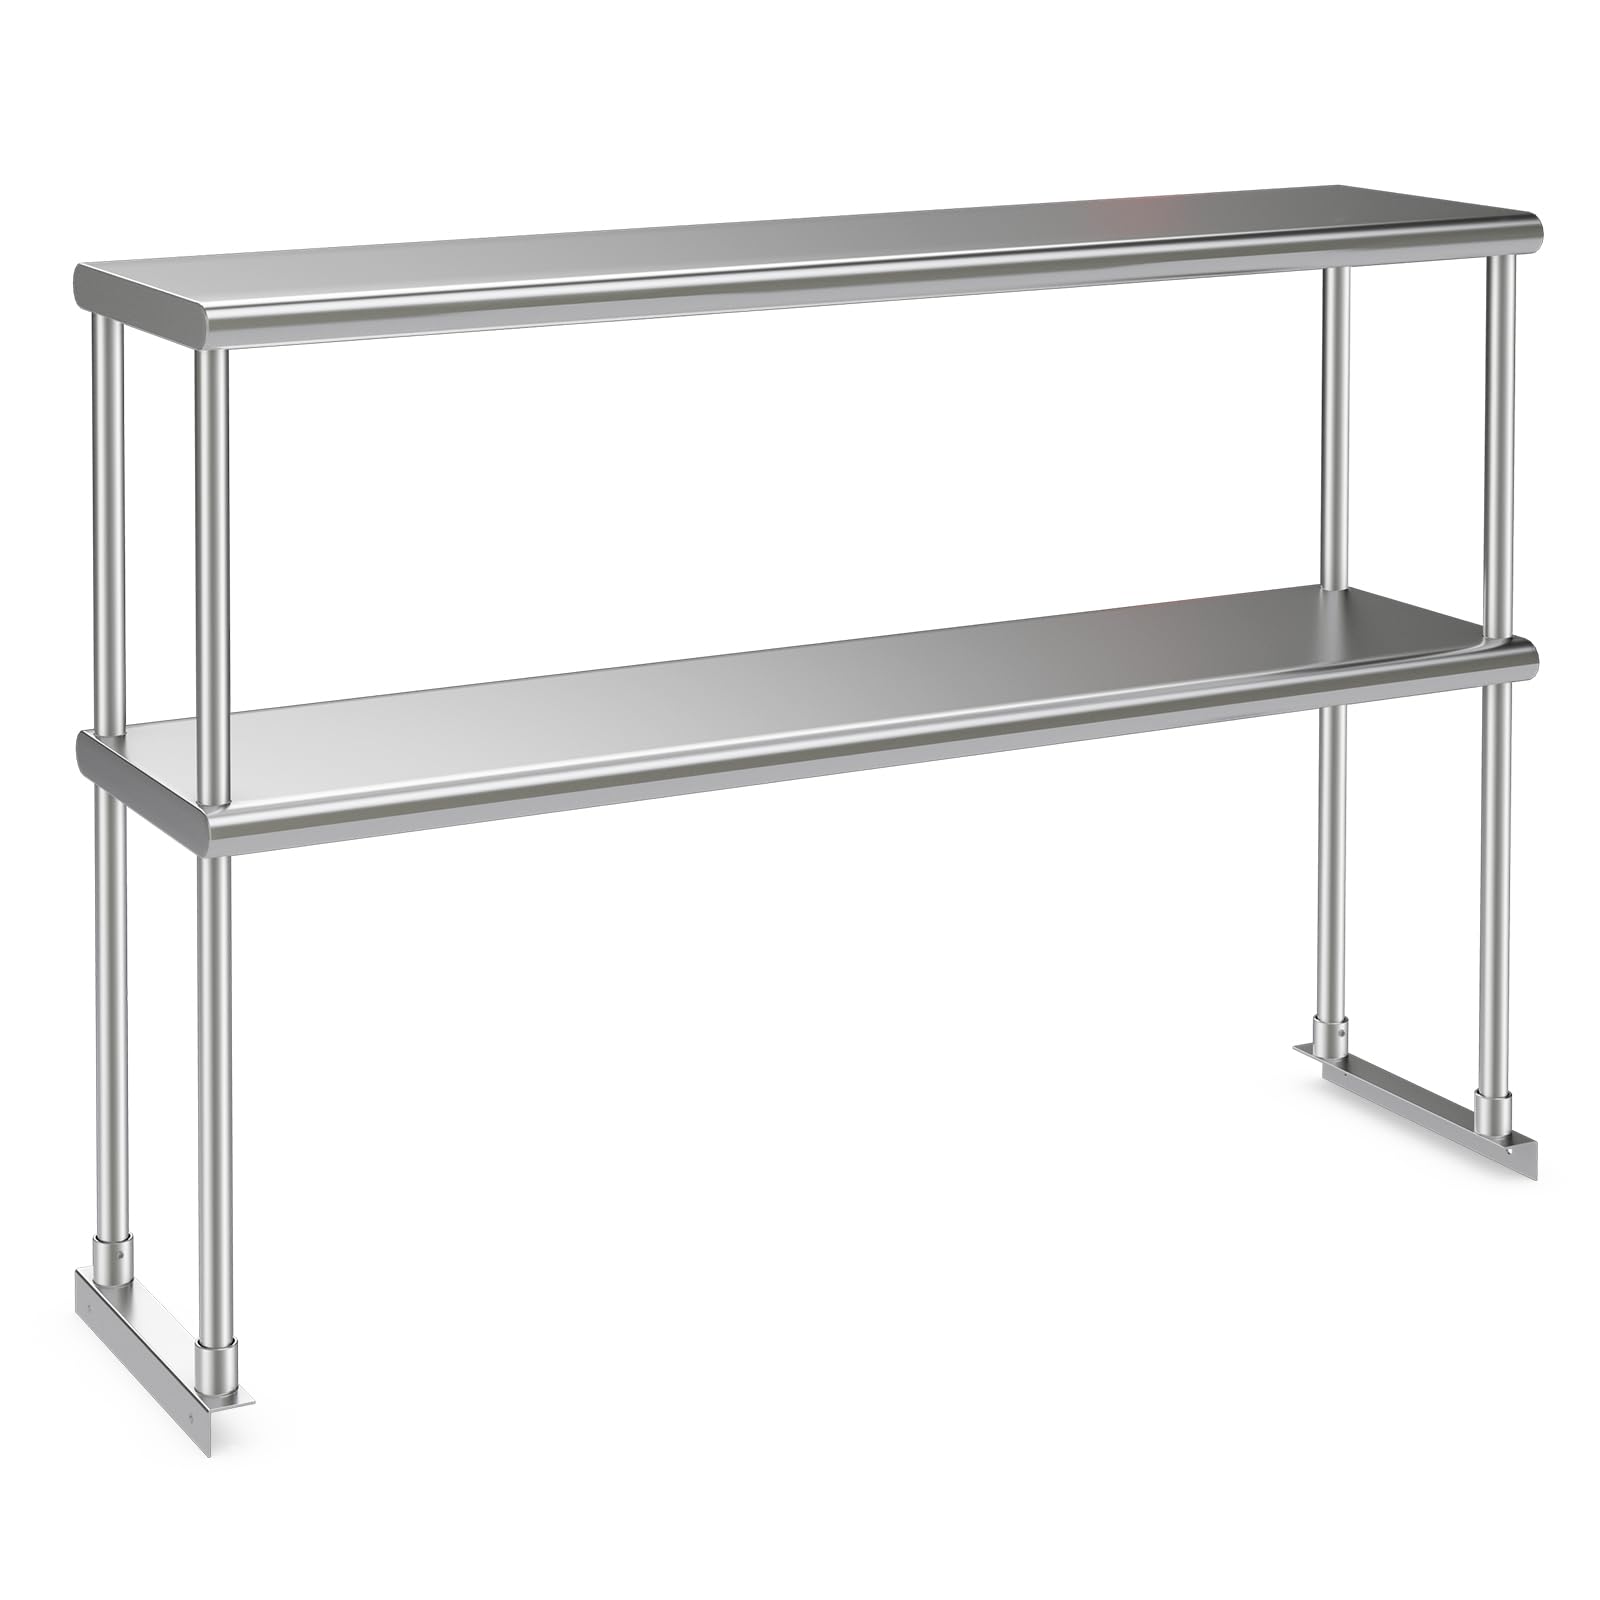 Giantex 48 Inch Stainless Steel Overshelf with Adjustable Lower Shelf